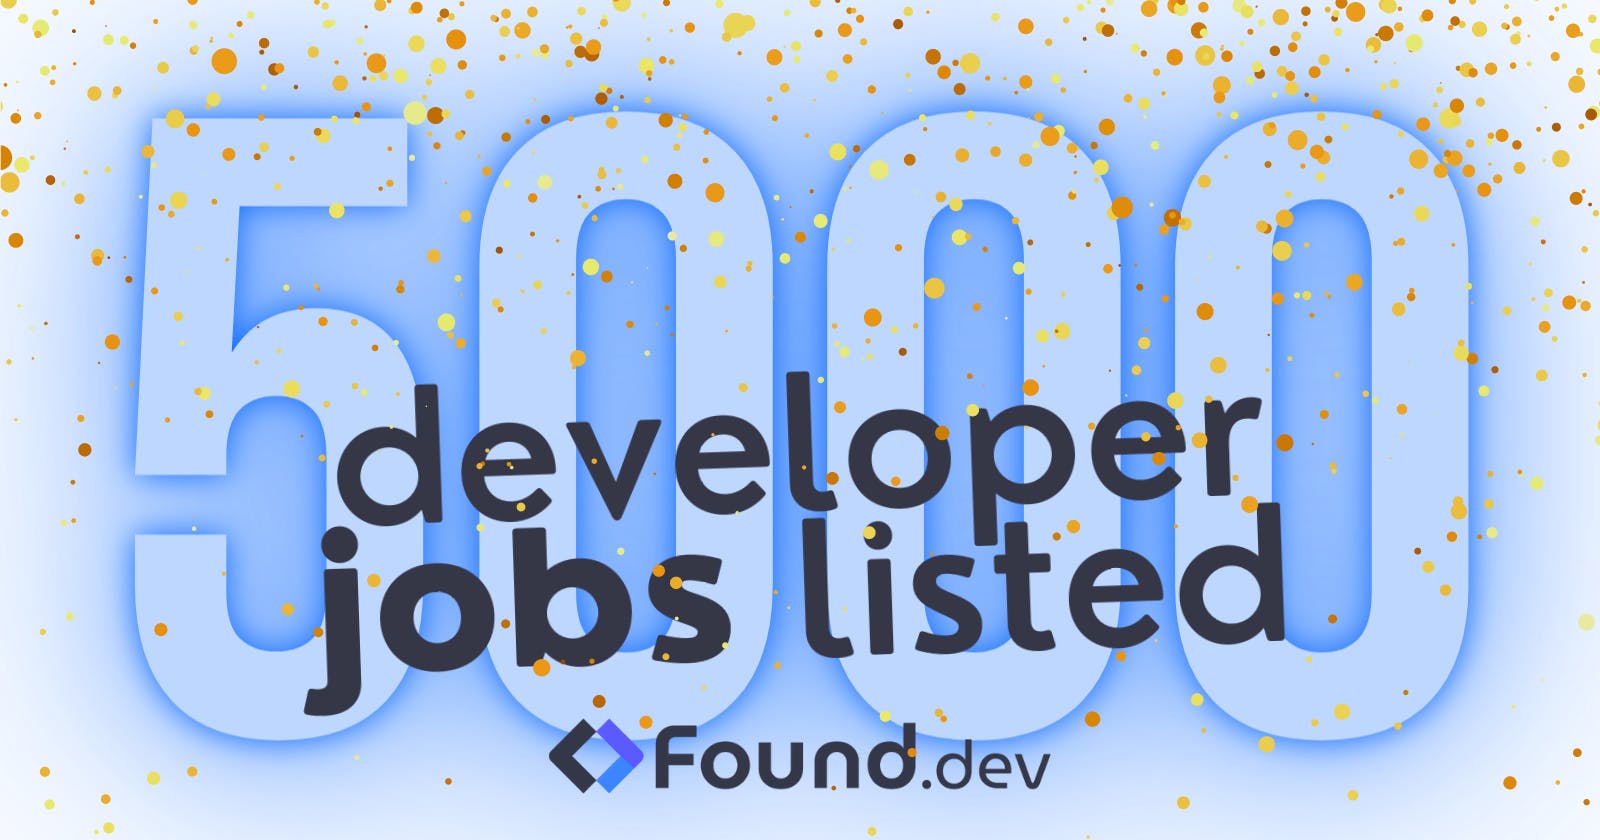 More than 5000 developer jobs listed!